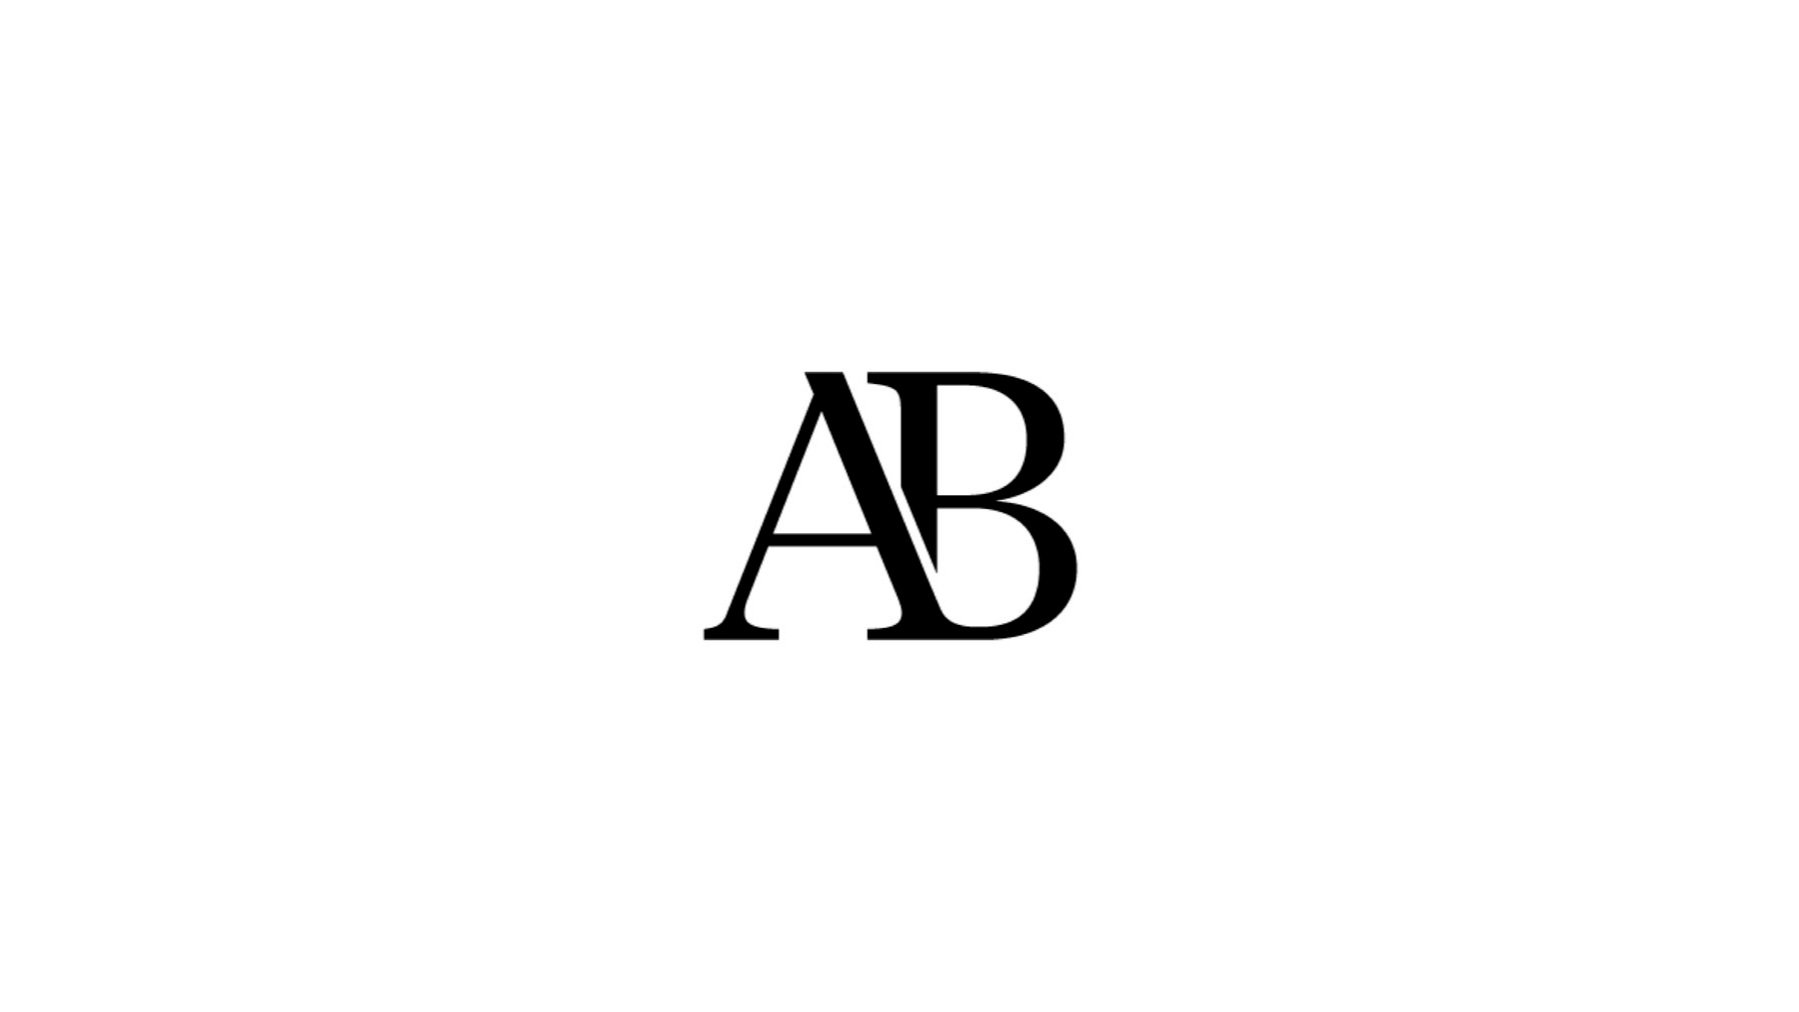   AB logo created by Irish Designer and Art Director     BOT  ( Brian O'Tuama)   